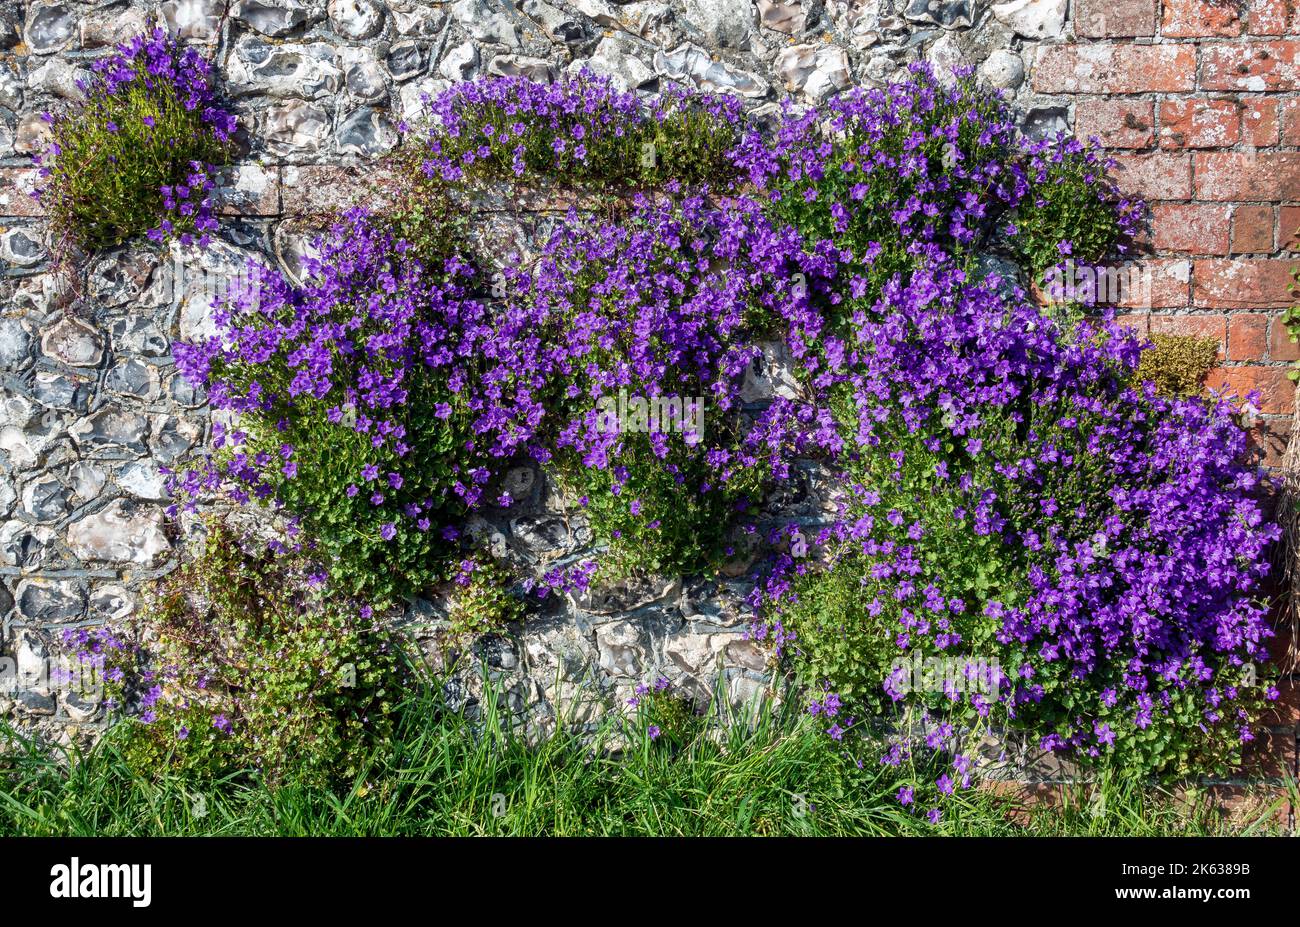 Aubretia flowers cascading down stone wall Stock Photo